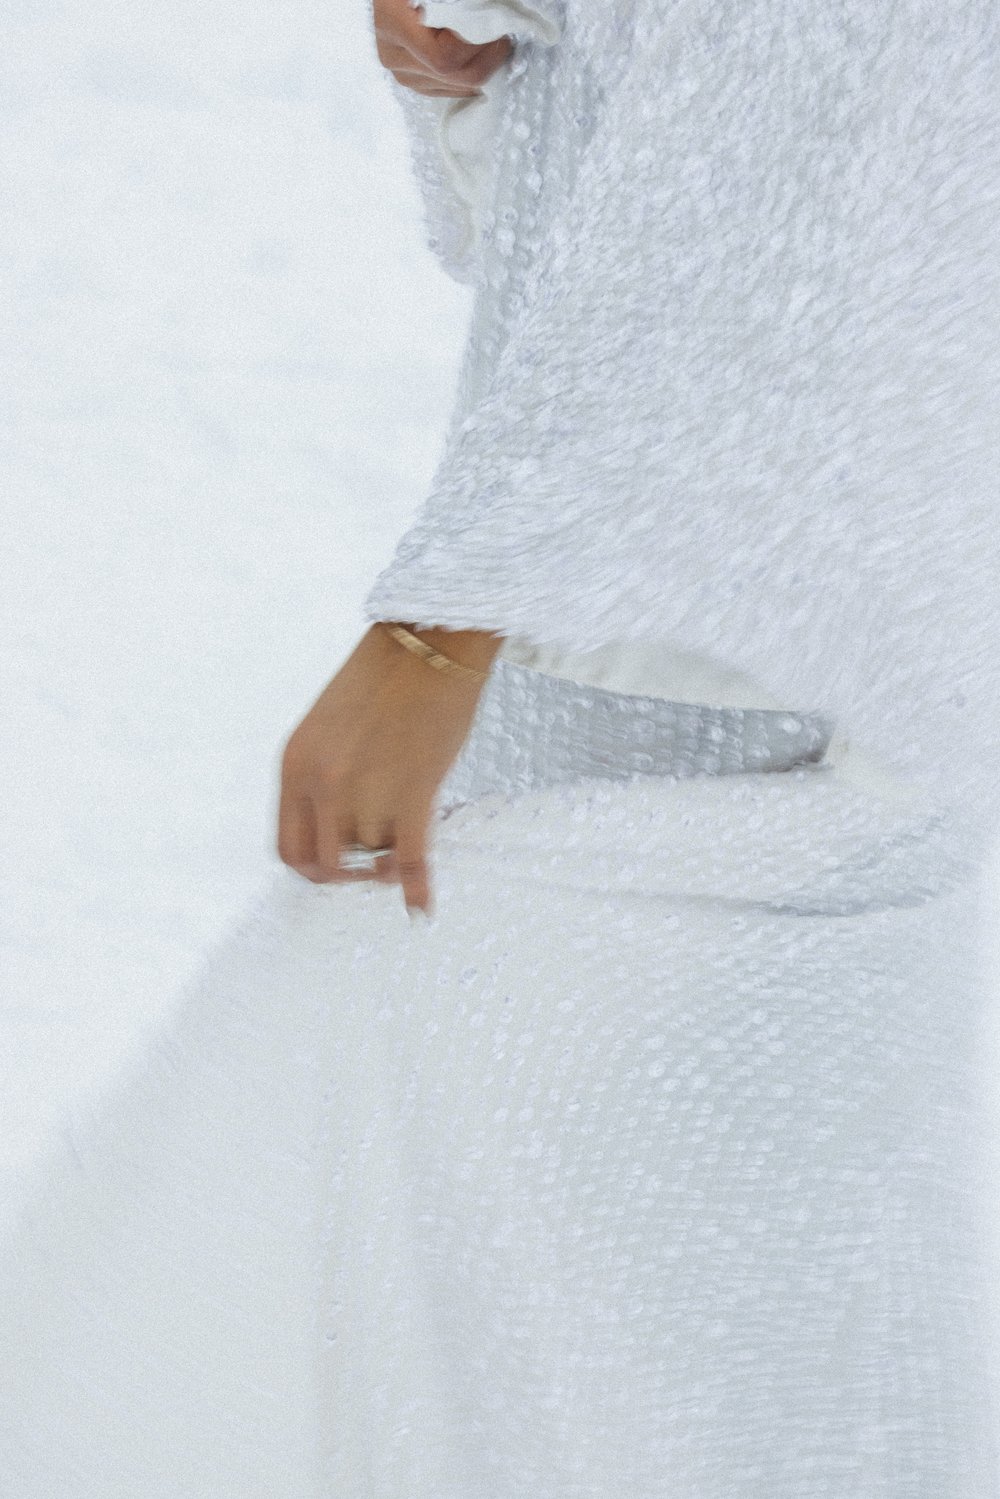  Bridal winter style with a silver glitter wedding gown captured by Savanna Richardson Photography. silver #SavannaRichardsonPhotography #SavannaRichardsonBridals #WinterBridals #WinterWedding #TibbleForkBridals #UtahBridals #MountainBridals 